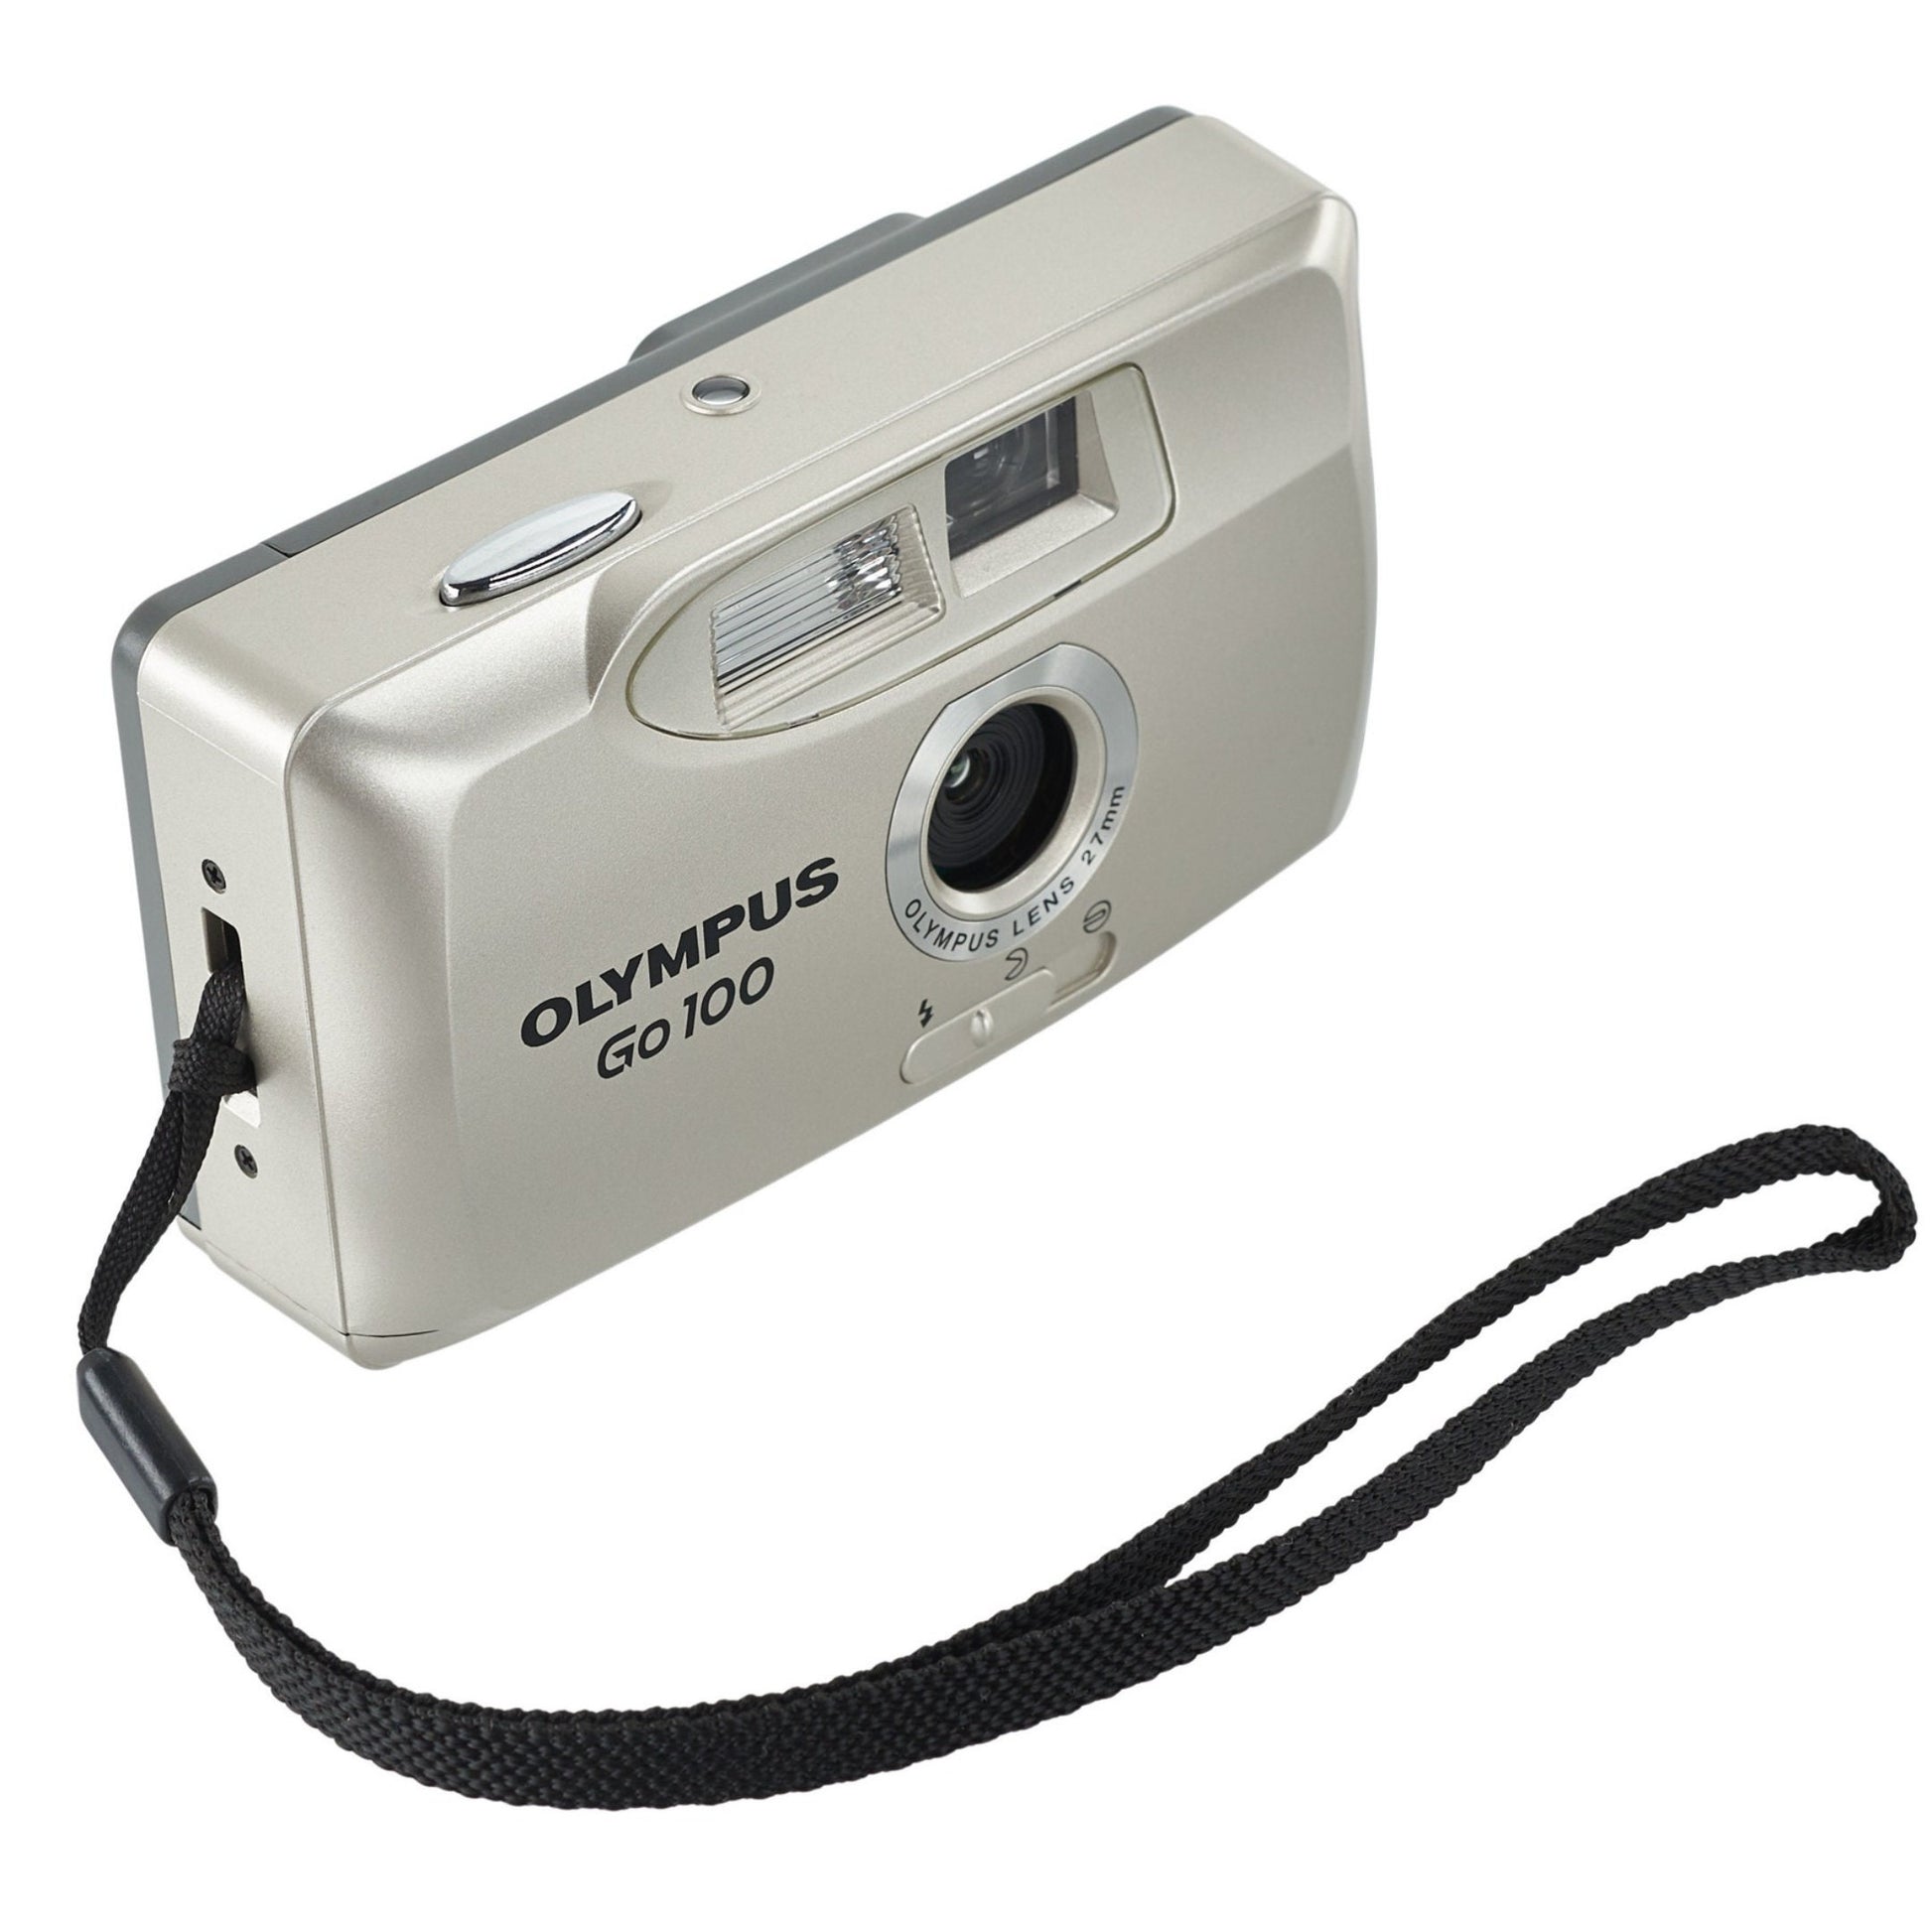 NEW!! Olympus Go 100 Vintage Camera, Point and Shot Camera, Working Film Camera - Vintage Polaroid Instant Cameras